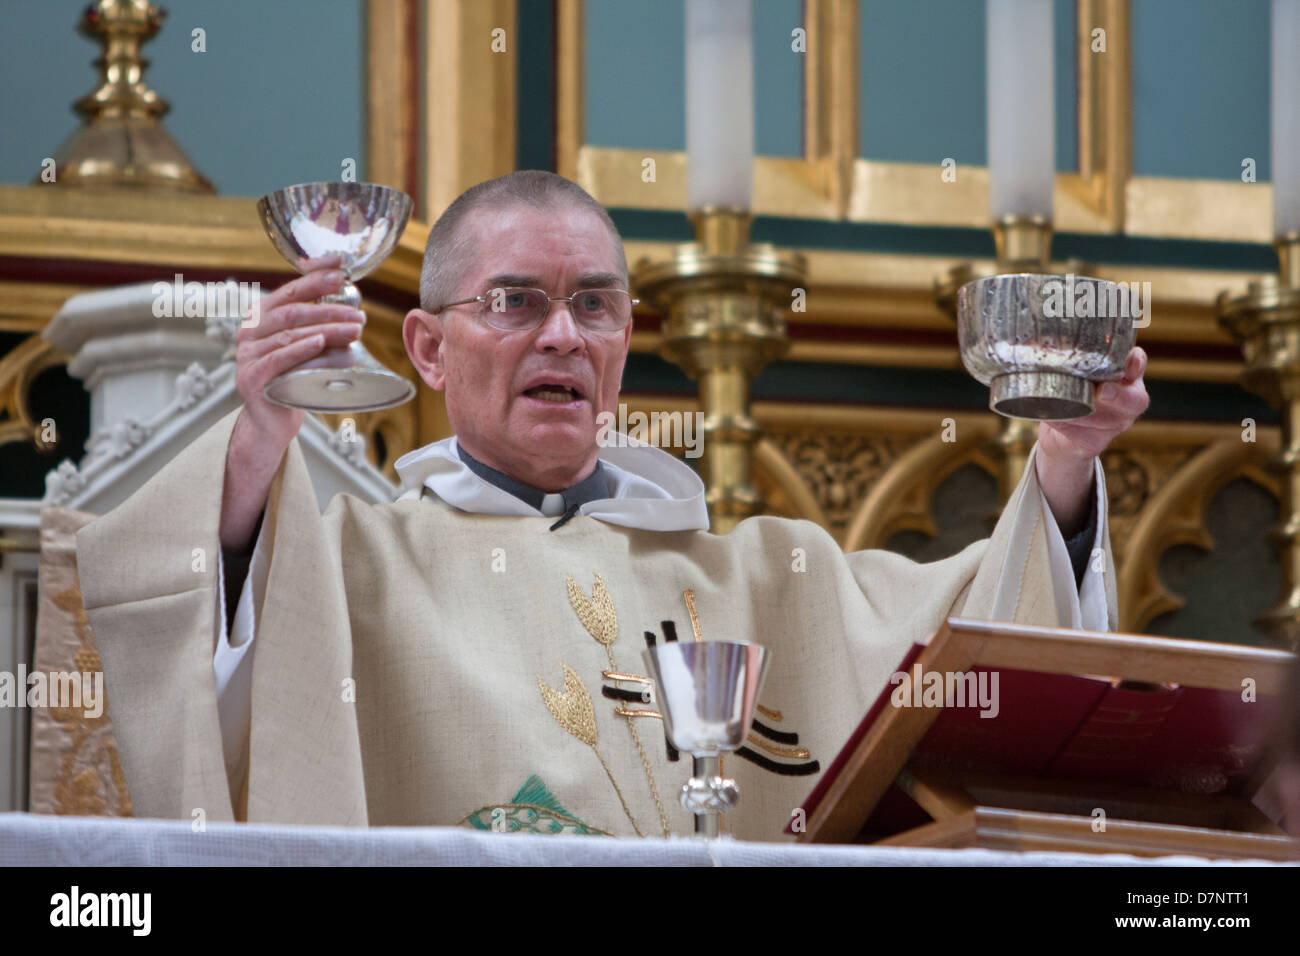 A Catholic priest celebrates mass Stock Photo